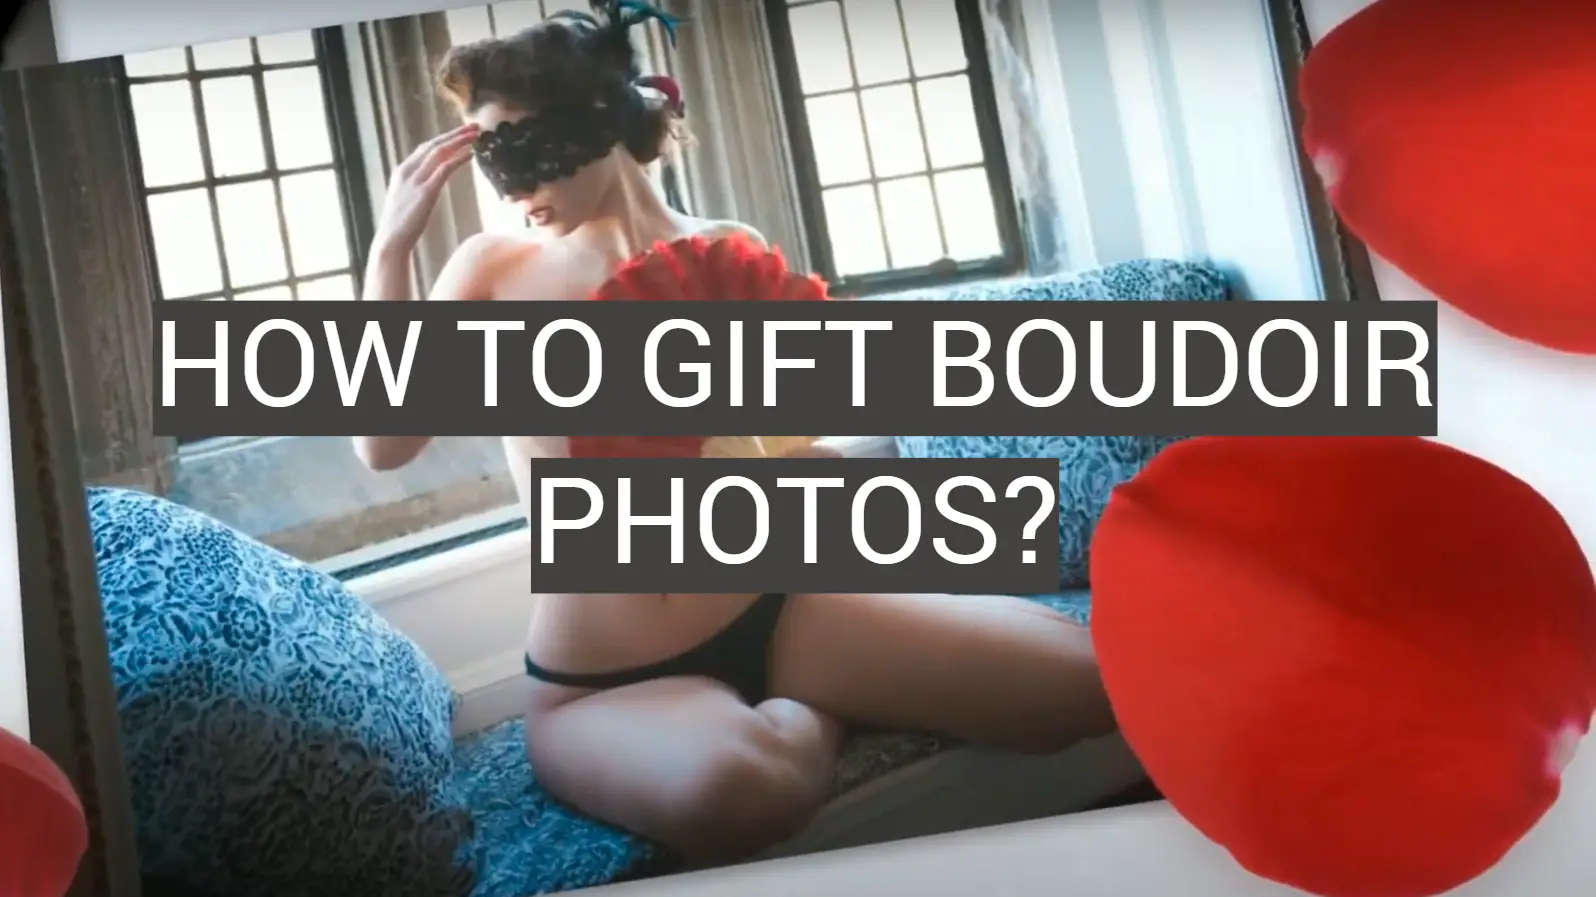 How to Gift Boudoir Photos?